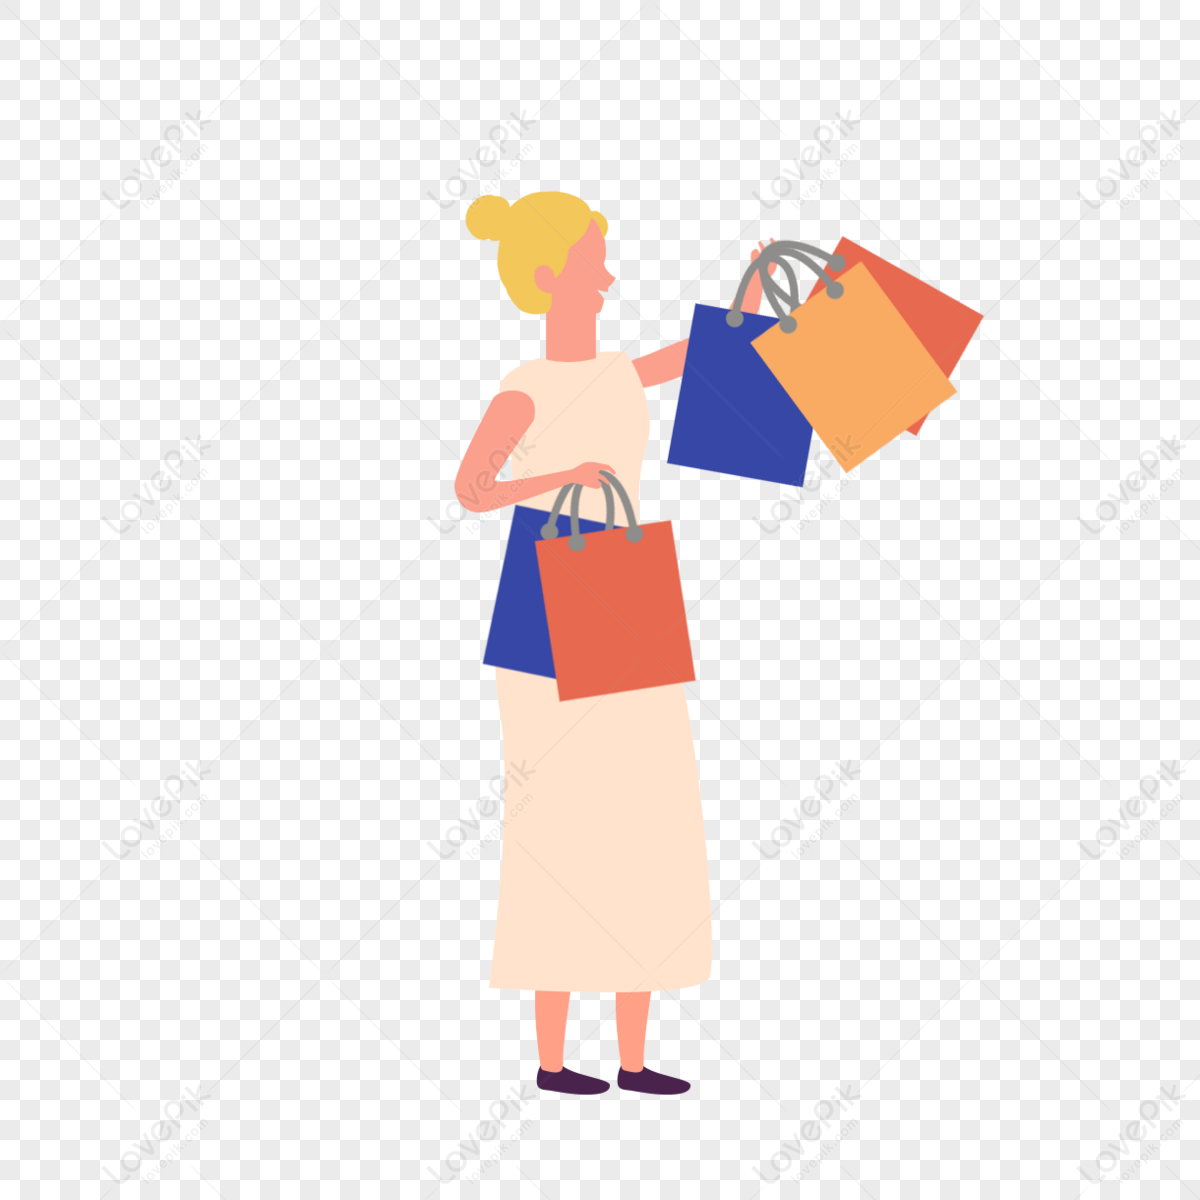 Cartoon hand drawn woman presenting shopping bag illustration,cartoon illustrations,paint hand png transparent background